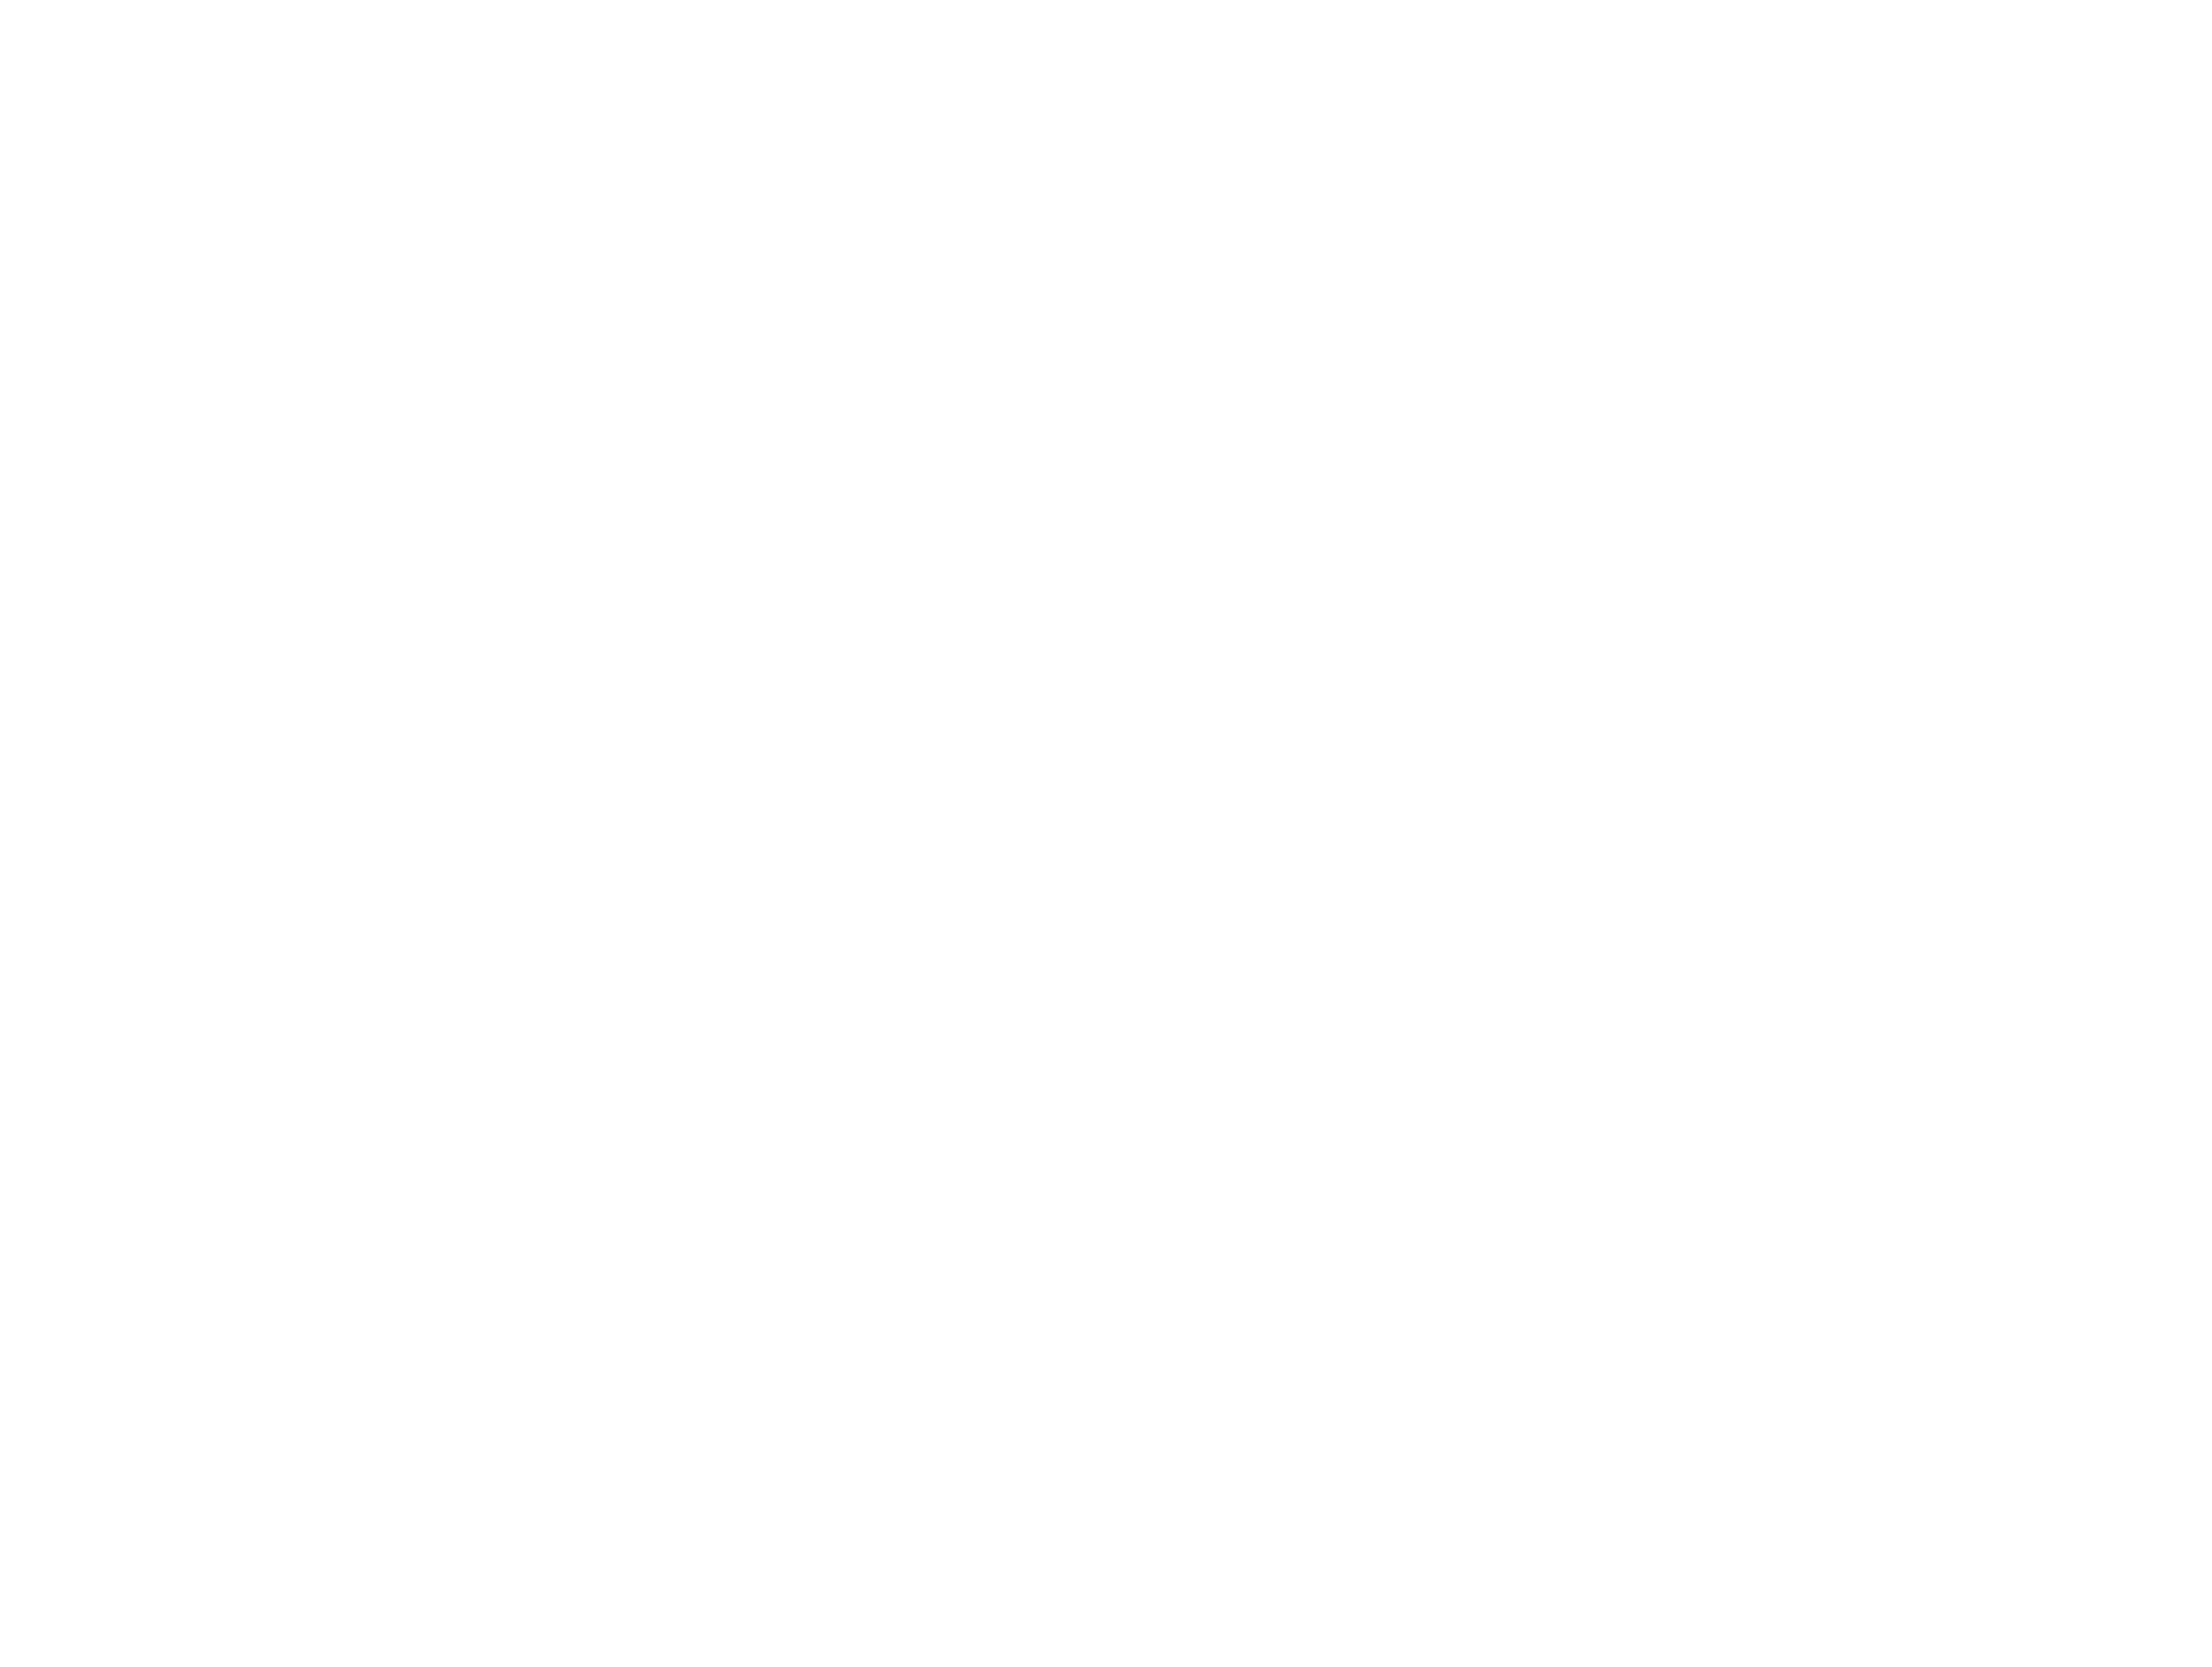 77 Capital